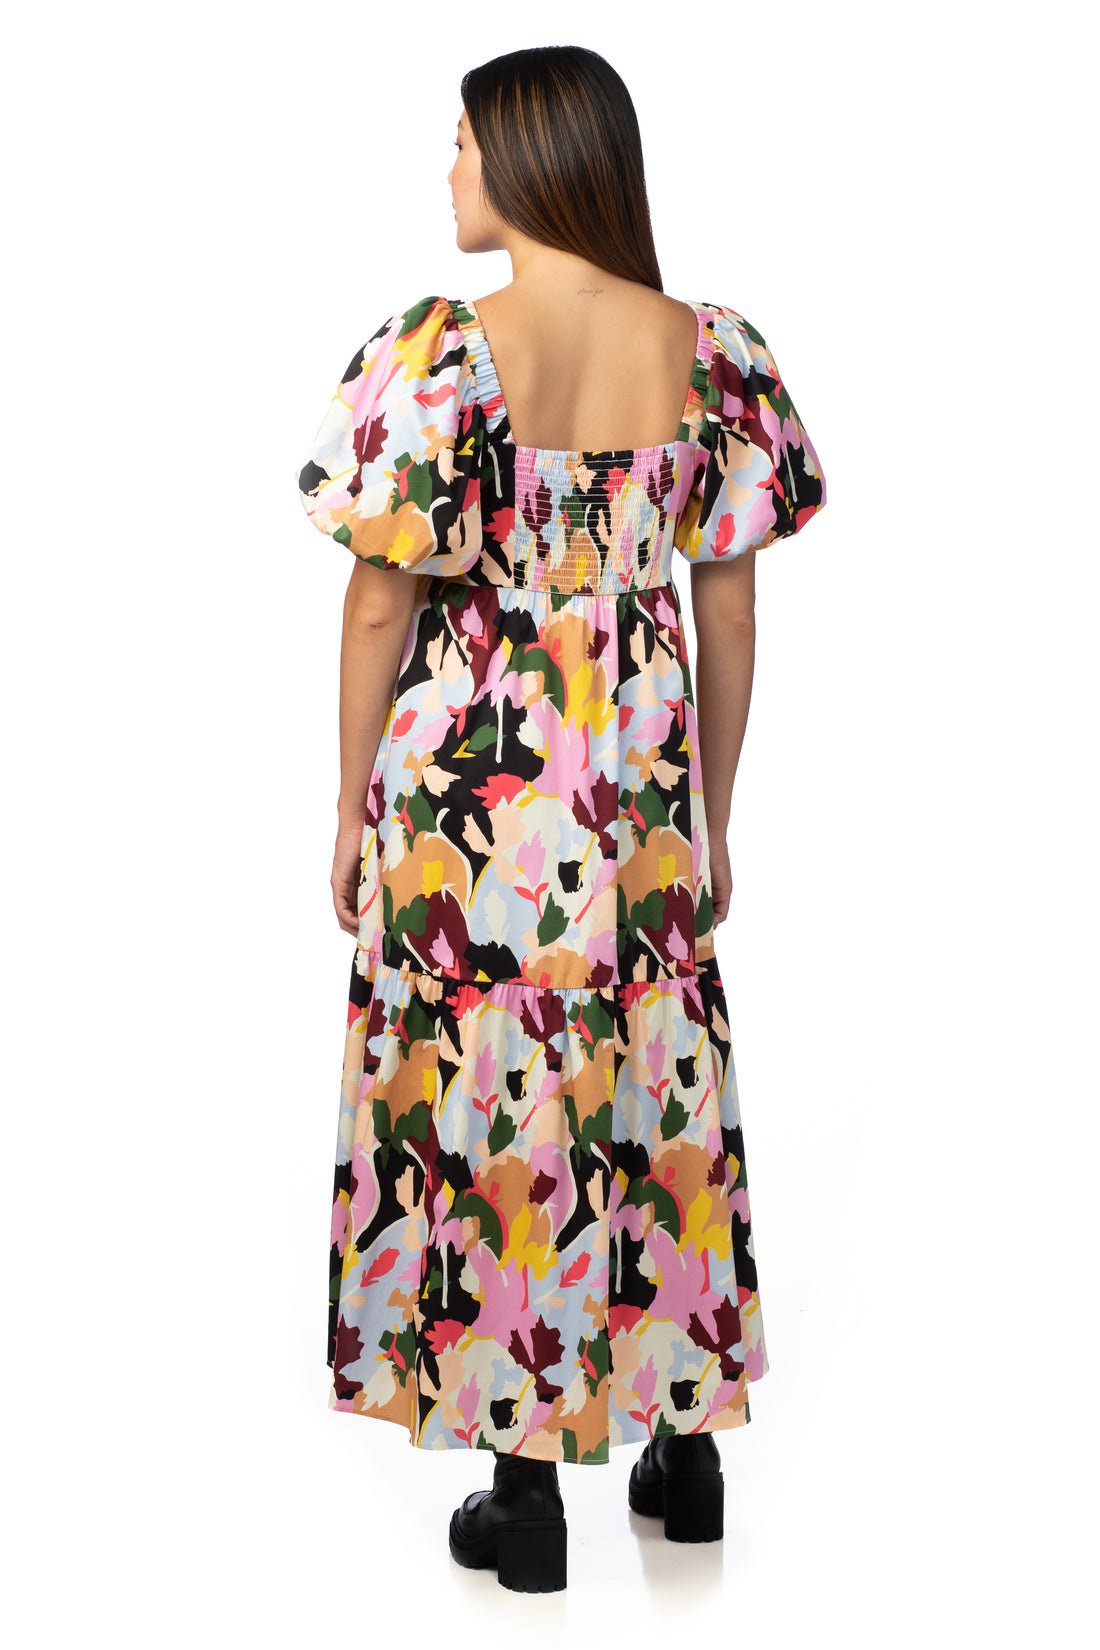 Crosby By Mollie Burch Goldie Dress Flowerpress